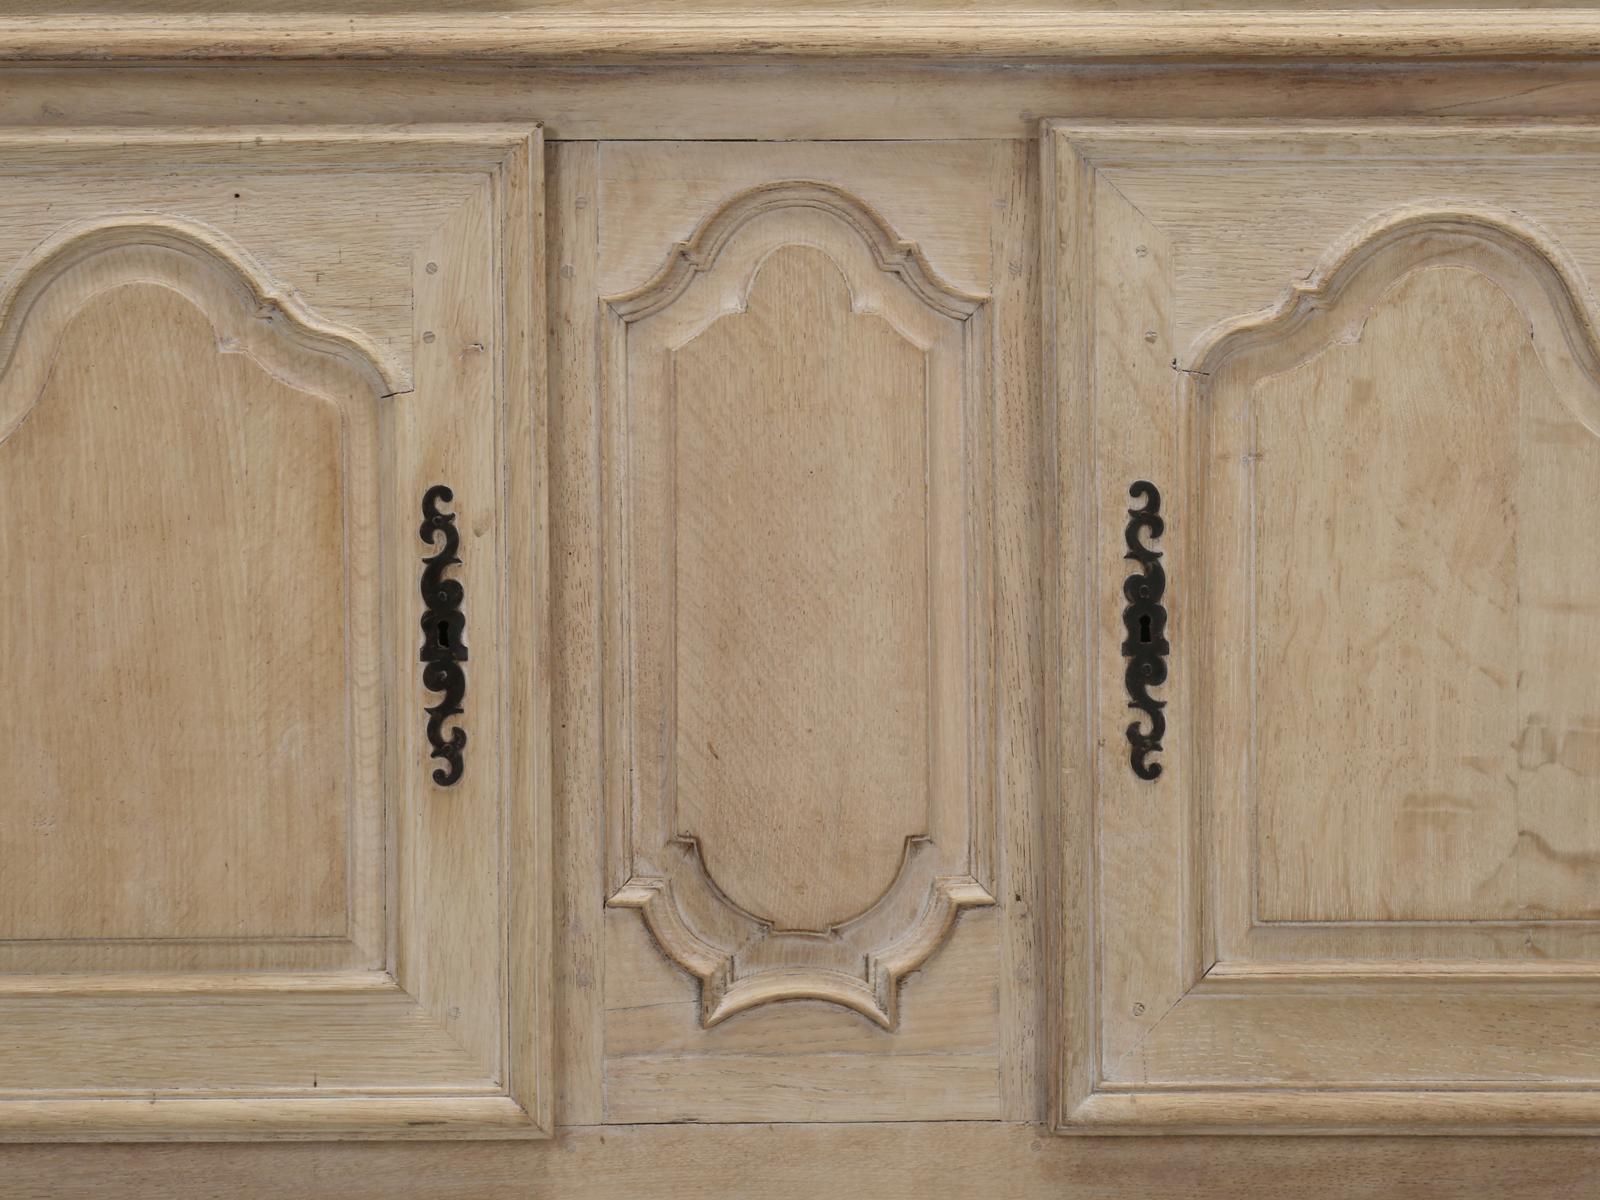 Antique French Bookcase or Cabinet in Limed White Oak Older Restoration c1800's For Sale 2